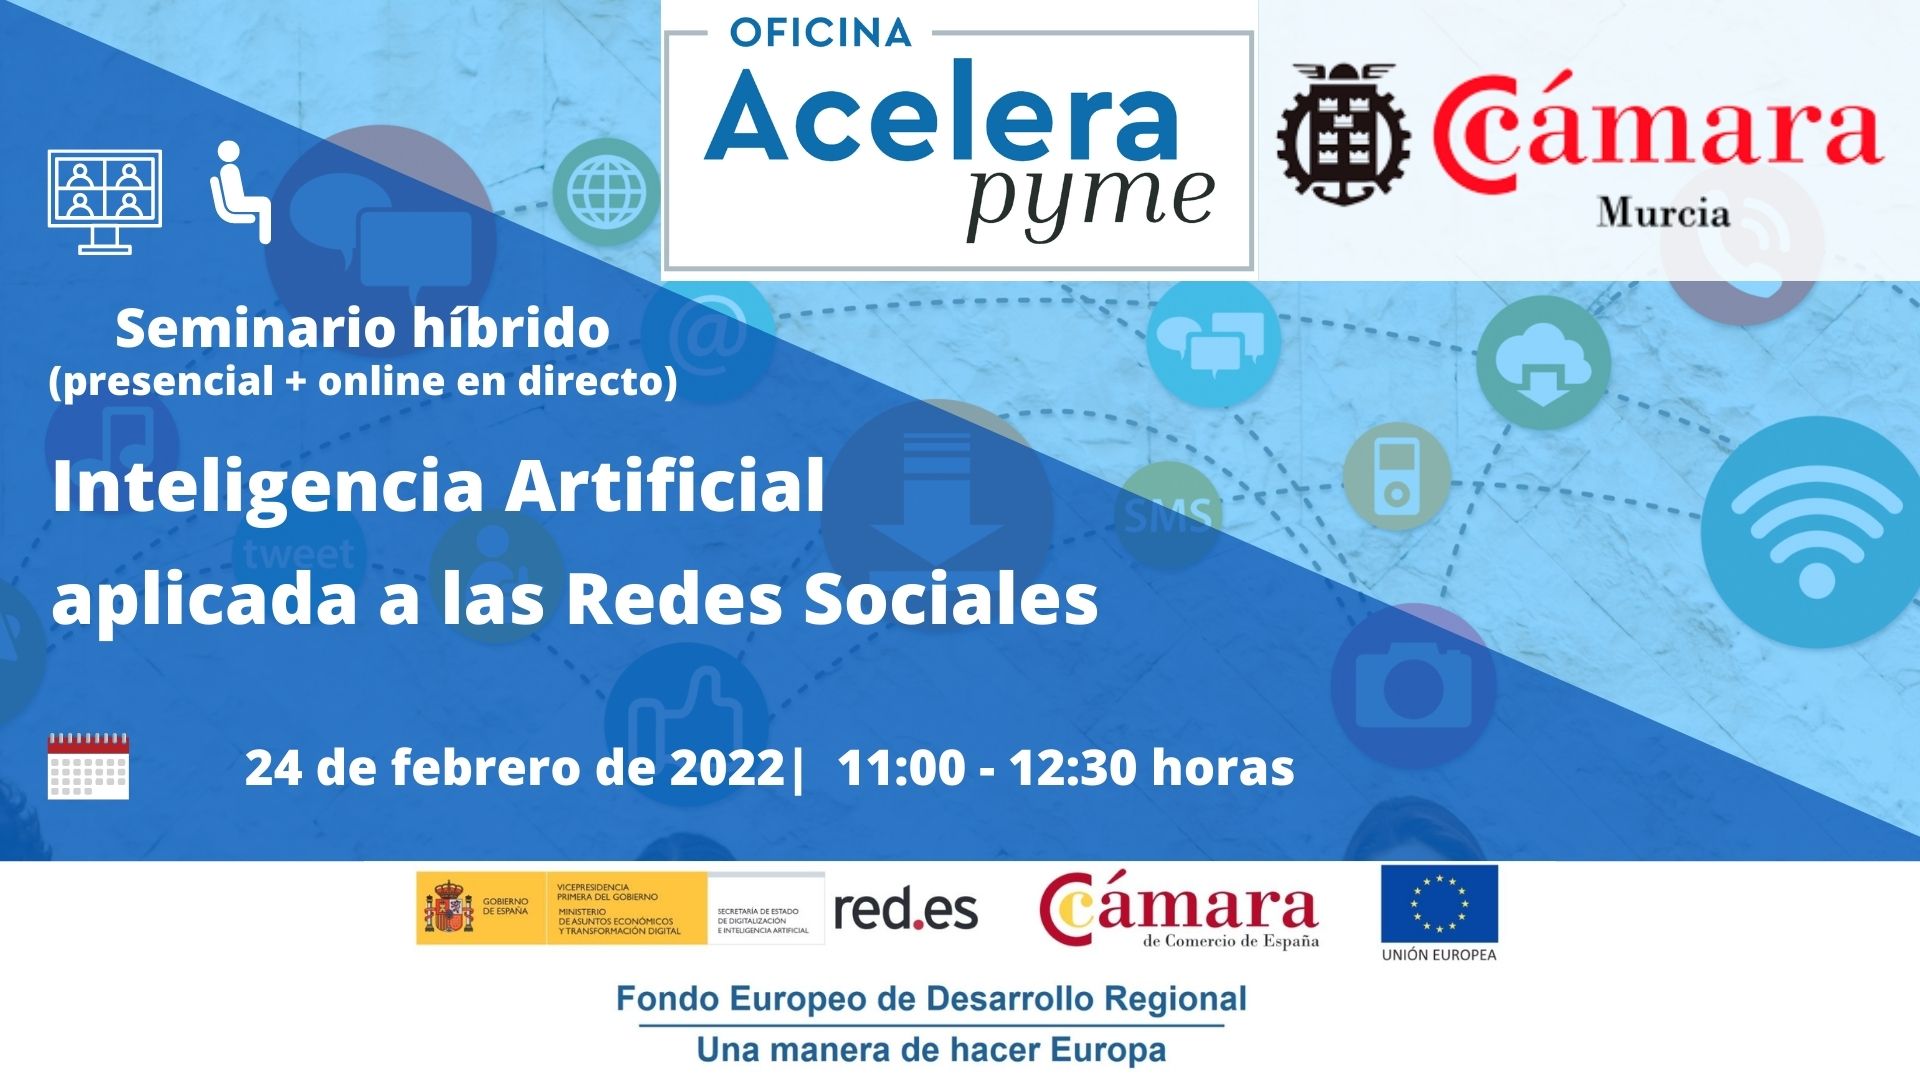 Seminario | Inteligencia Artificial aplicada a las Redes Sociales | Oficina Acelera Pyme | Camara de Comercio de Murcia